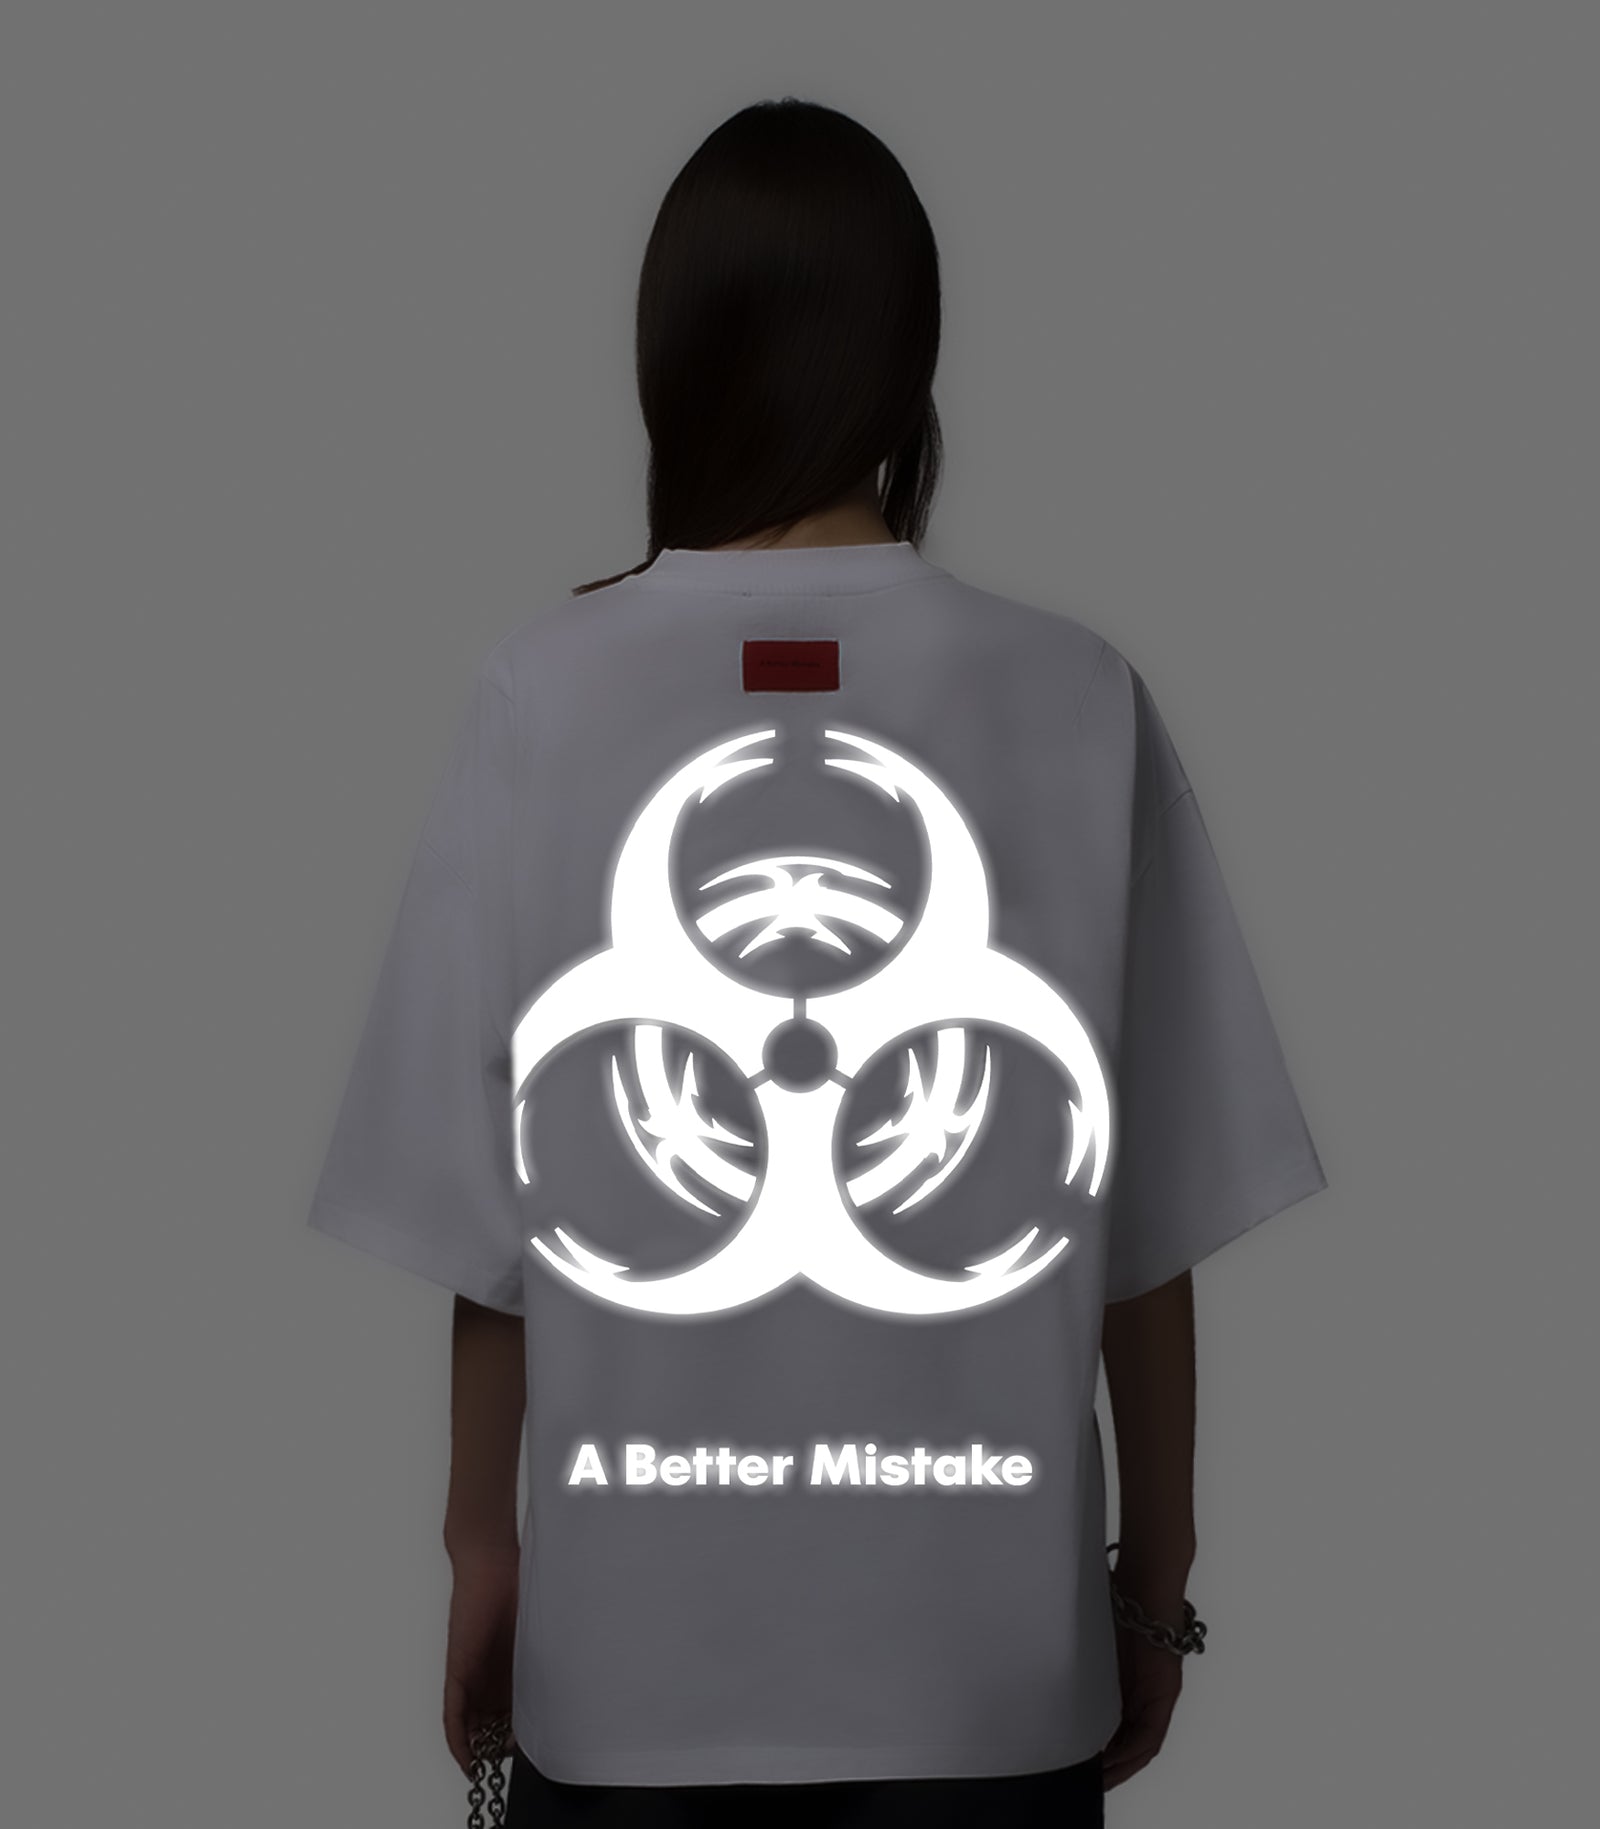 Raver Reflective T-Shirt